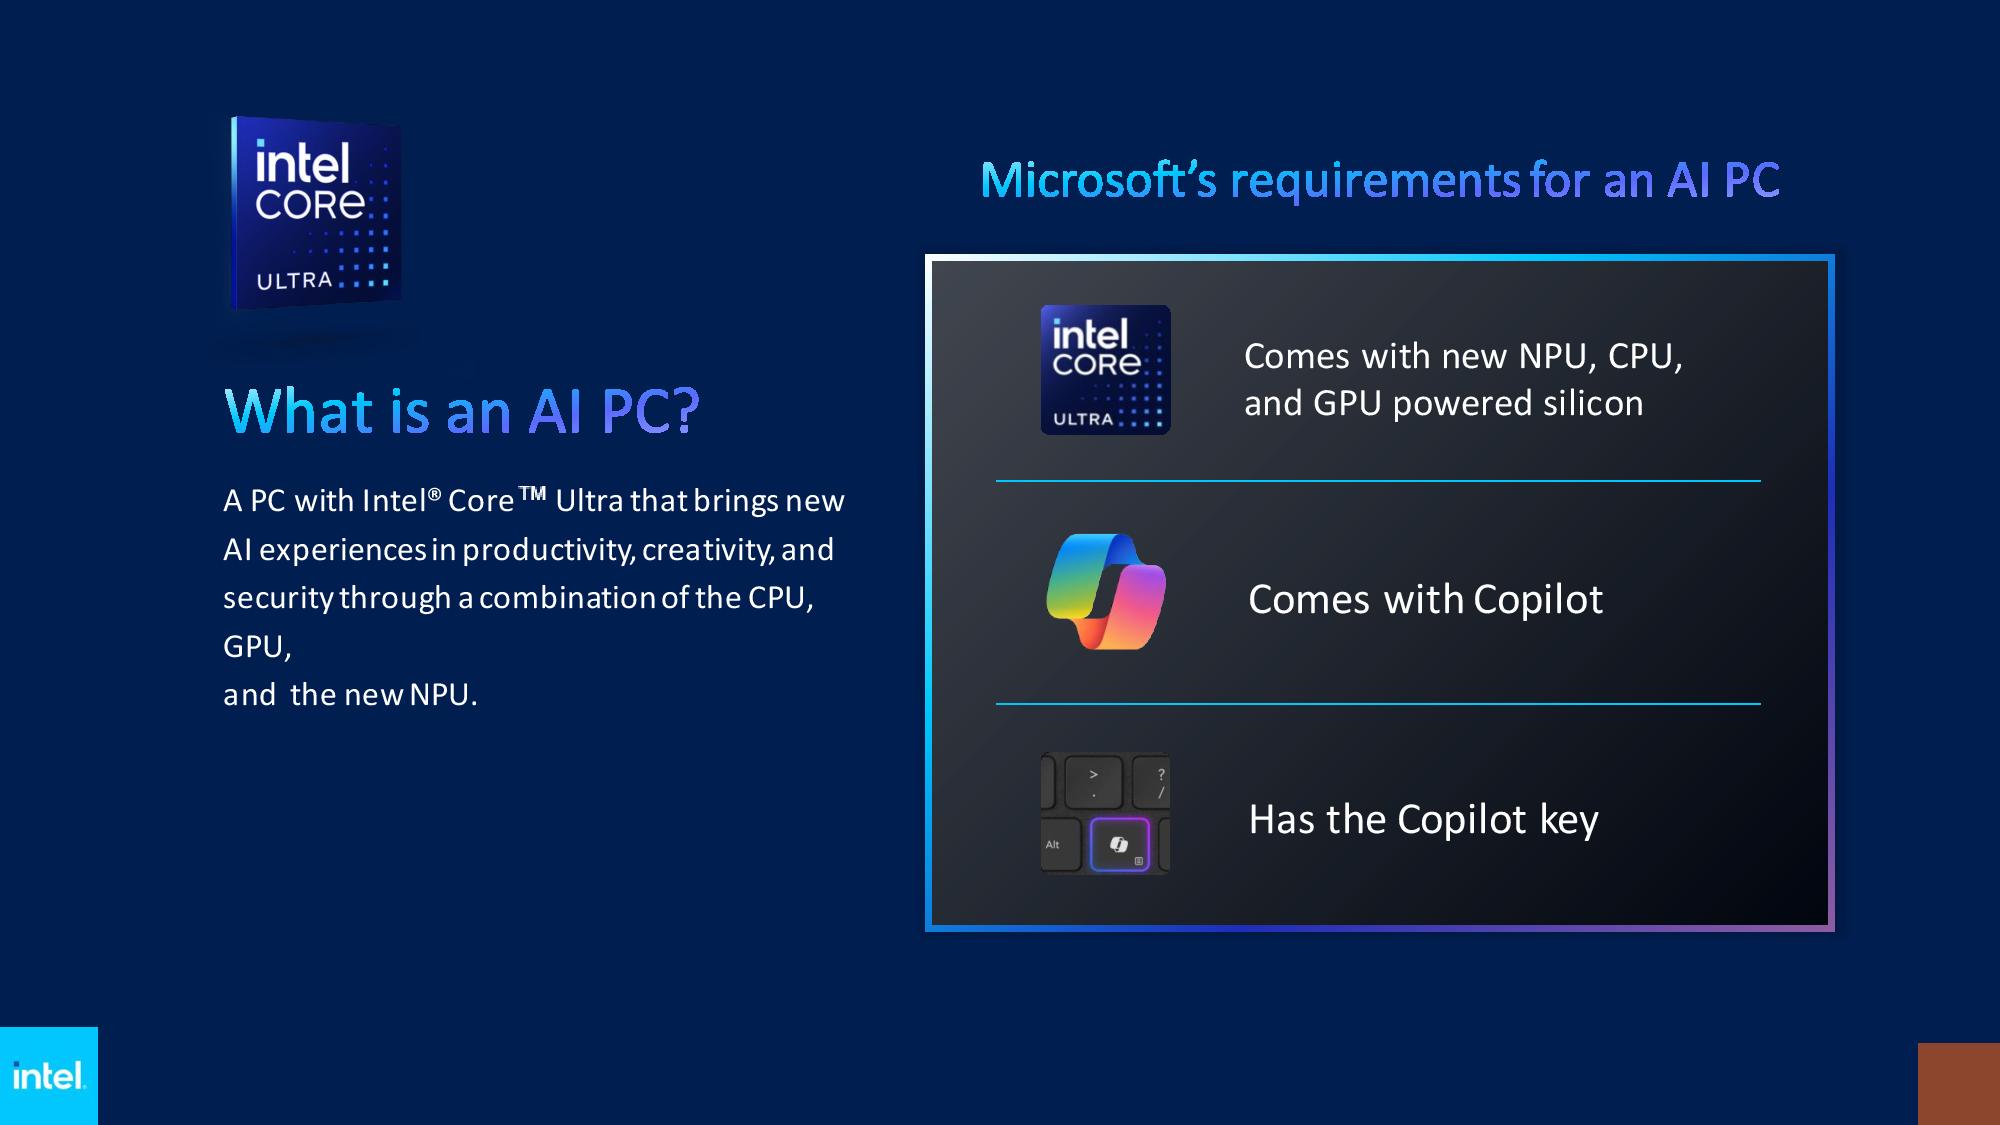 Intel confirms Microsoft Copilot will soon run locally on PCs, next-gen AI PCs require 40 TOPS of NPU performance